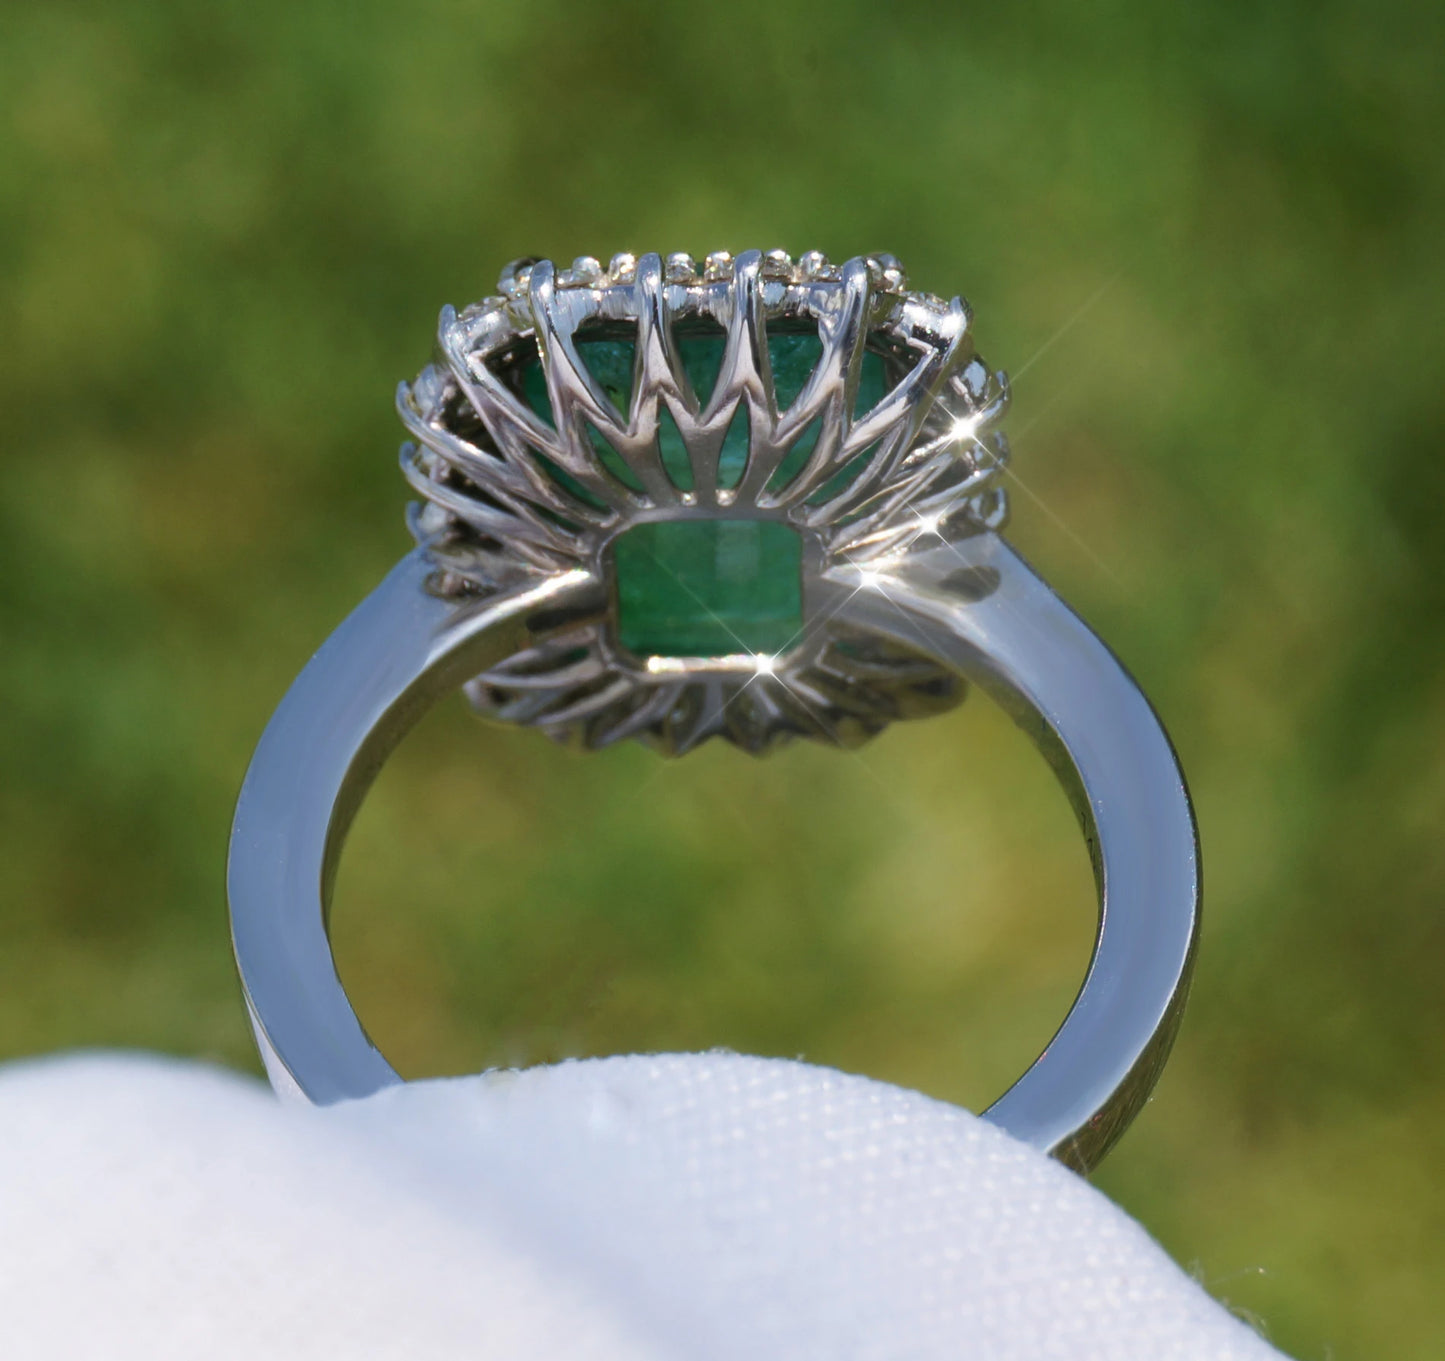 Emerald & diamond ring 14k white gold 4.67ctw green GIA certified